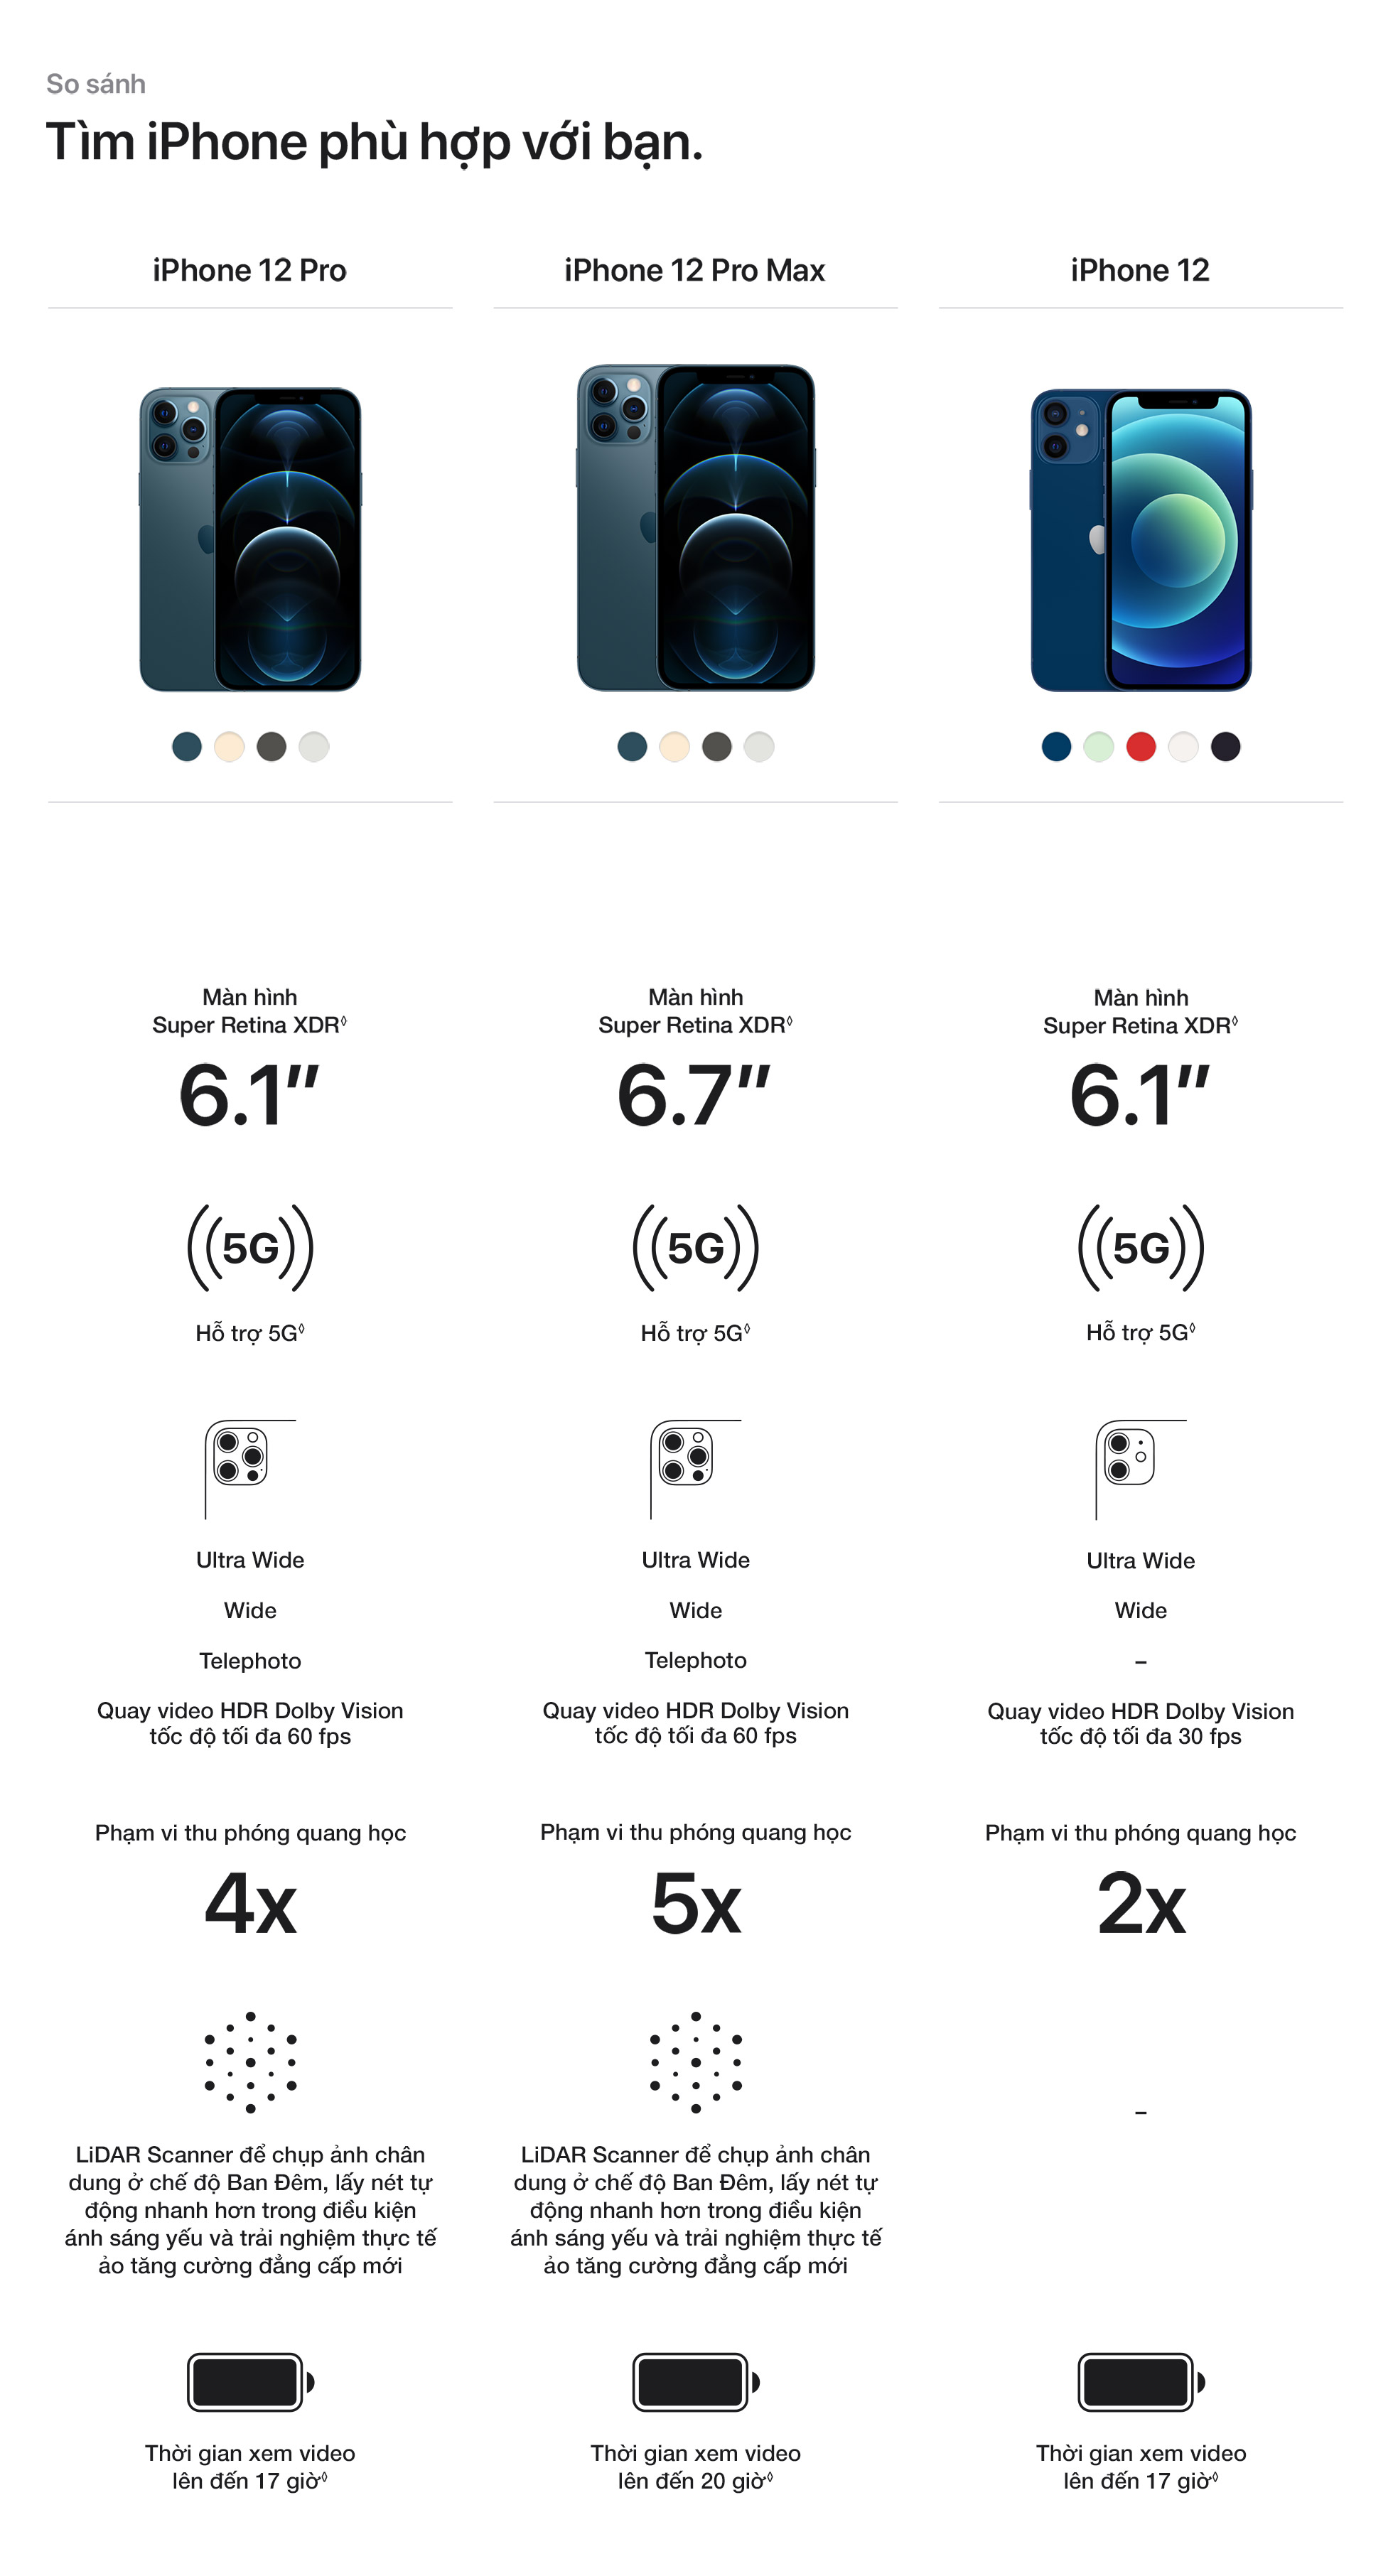 iPhone 12 Pro Max - So sánh kích cỡ